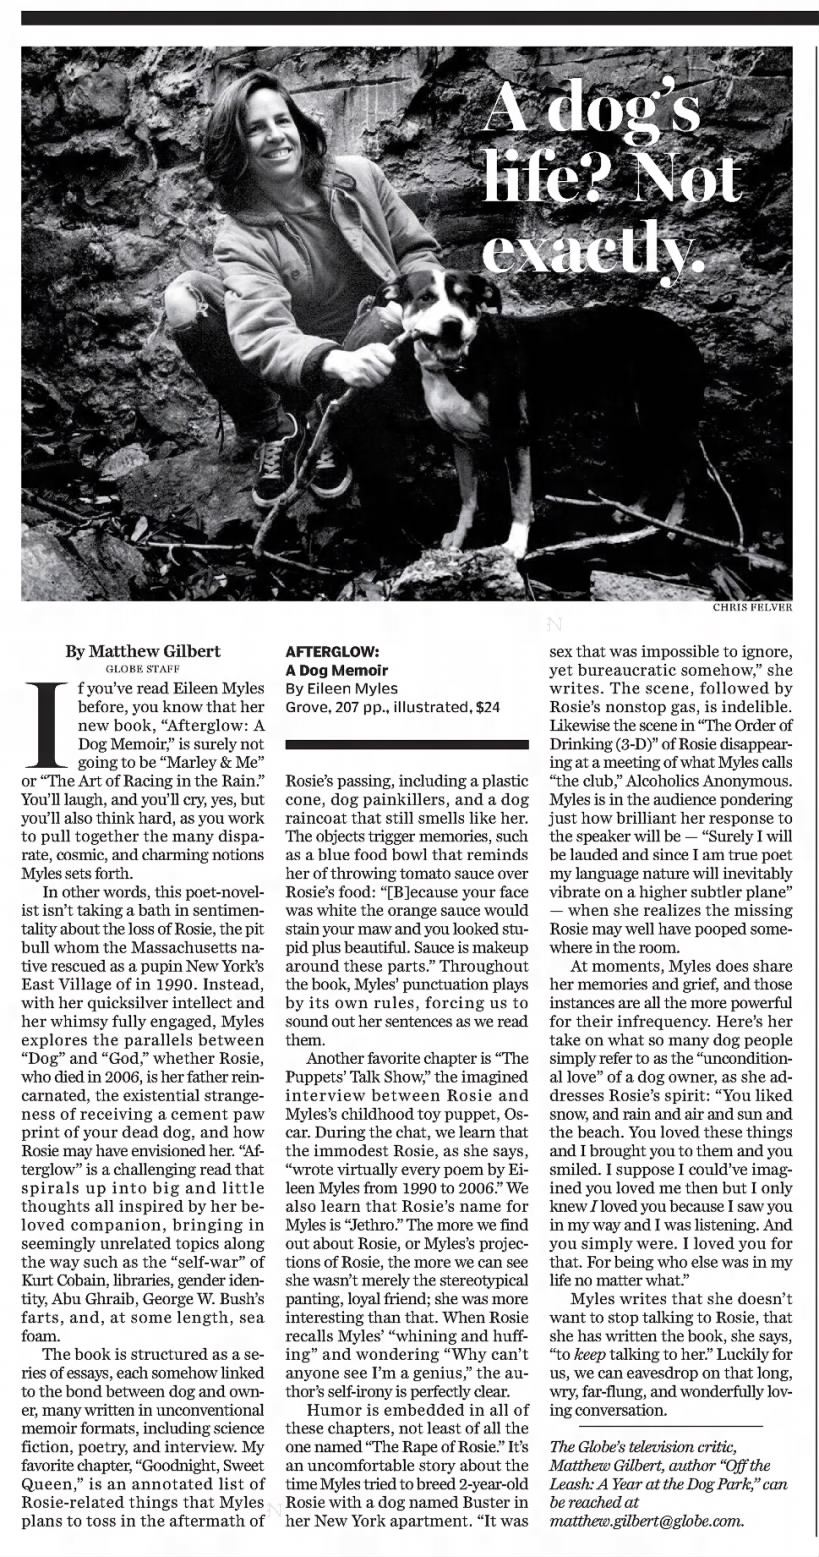 Matthew Gilbert, "A dog's life? Not exactly." Boston Globe, September 17, 2017, N15